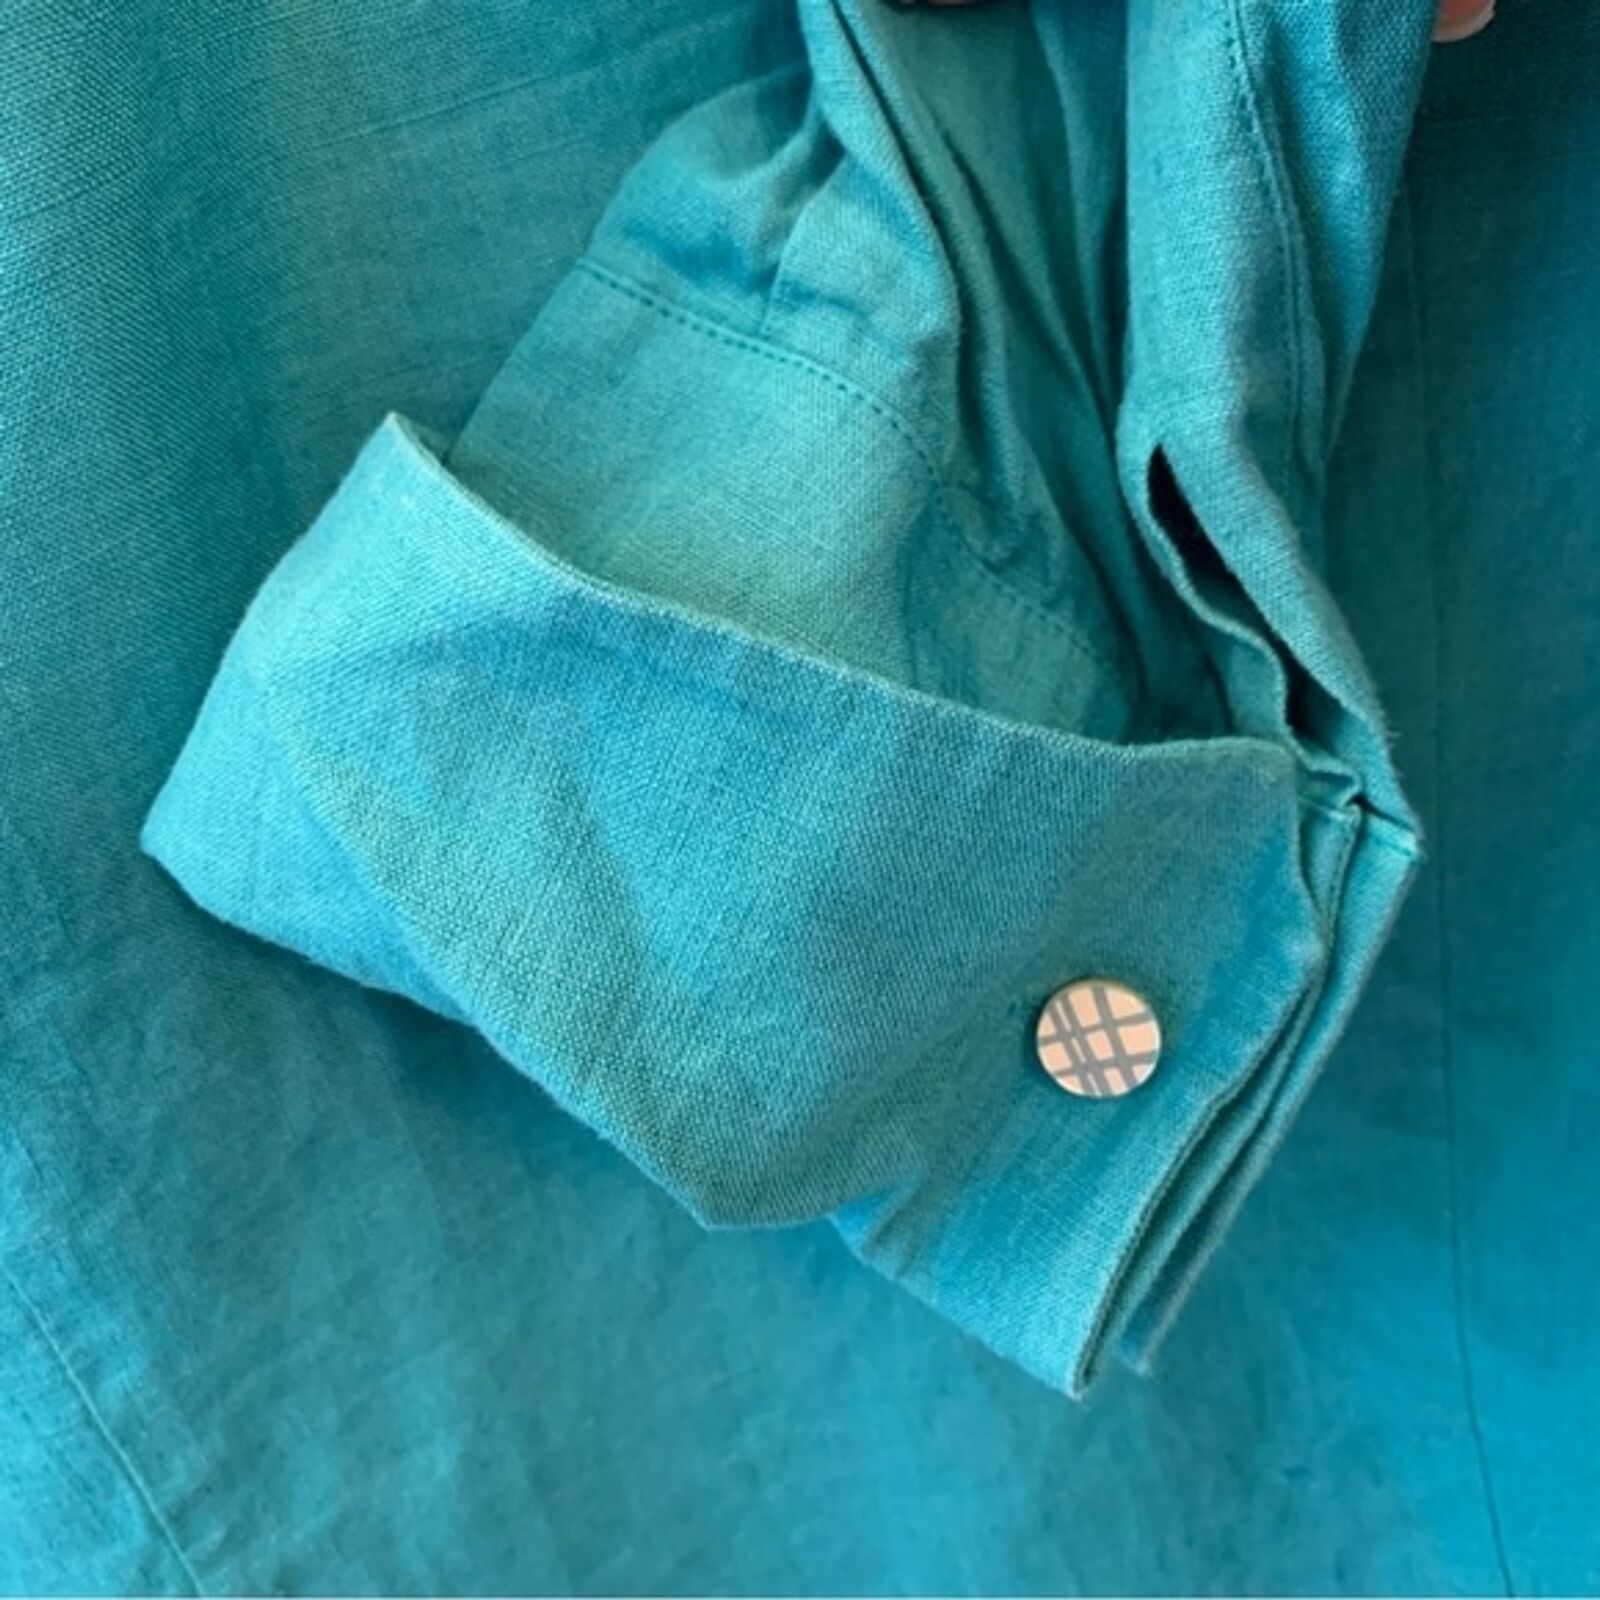 Max Mara Women's Puro Lino Blue Linen Collared Button… - Gem